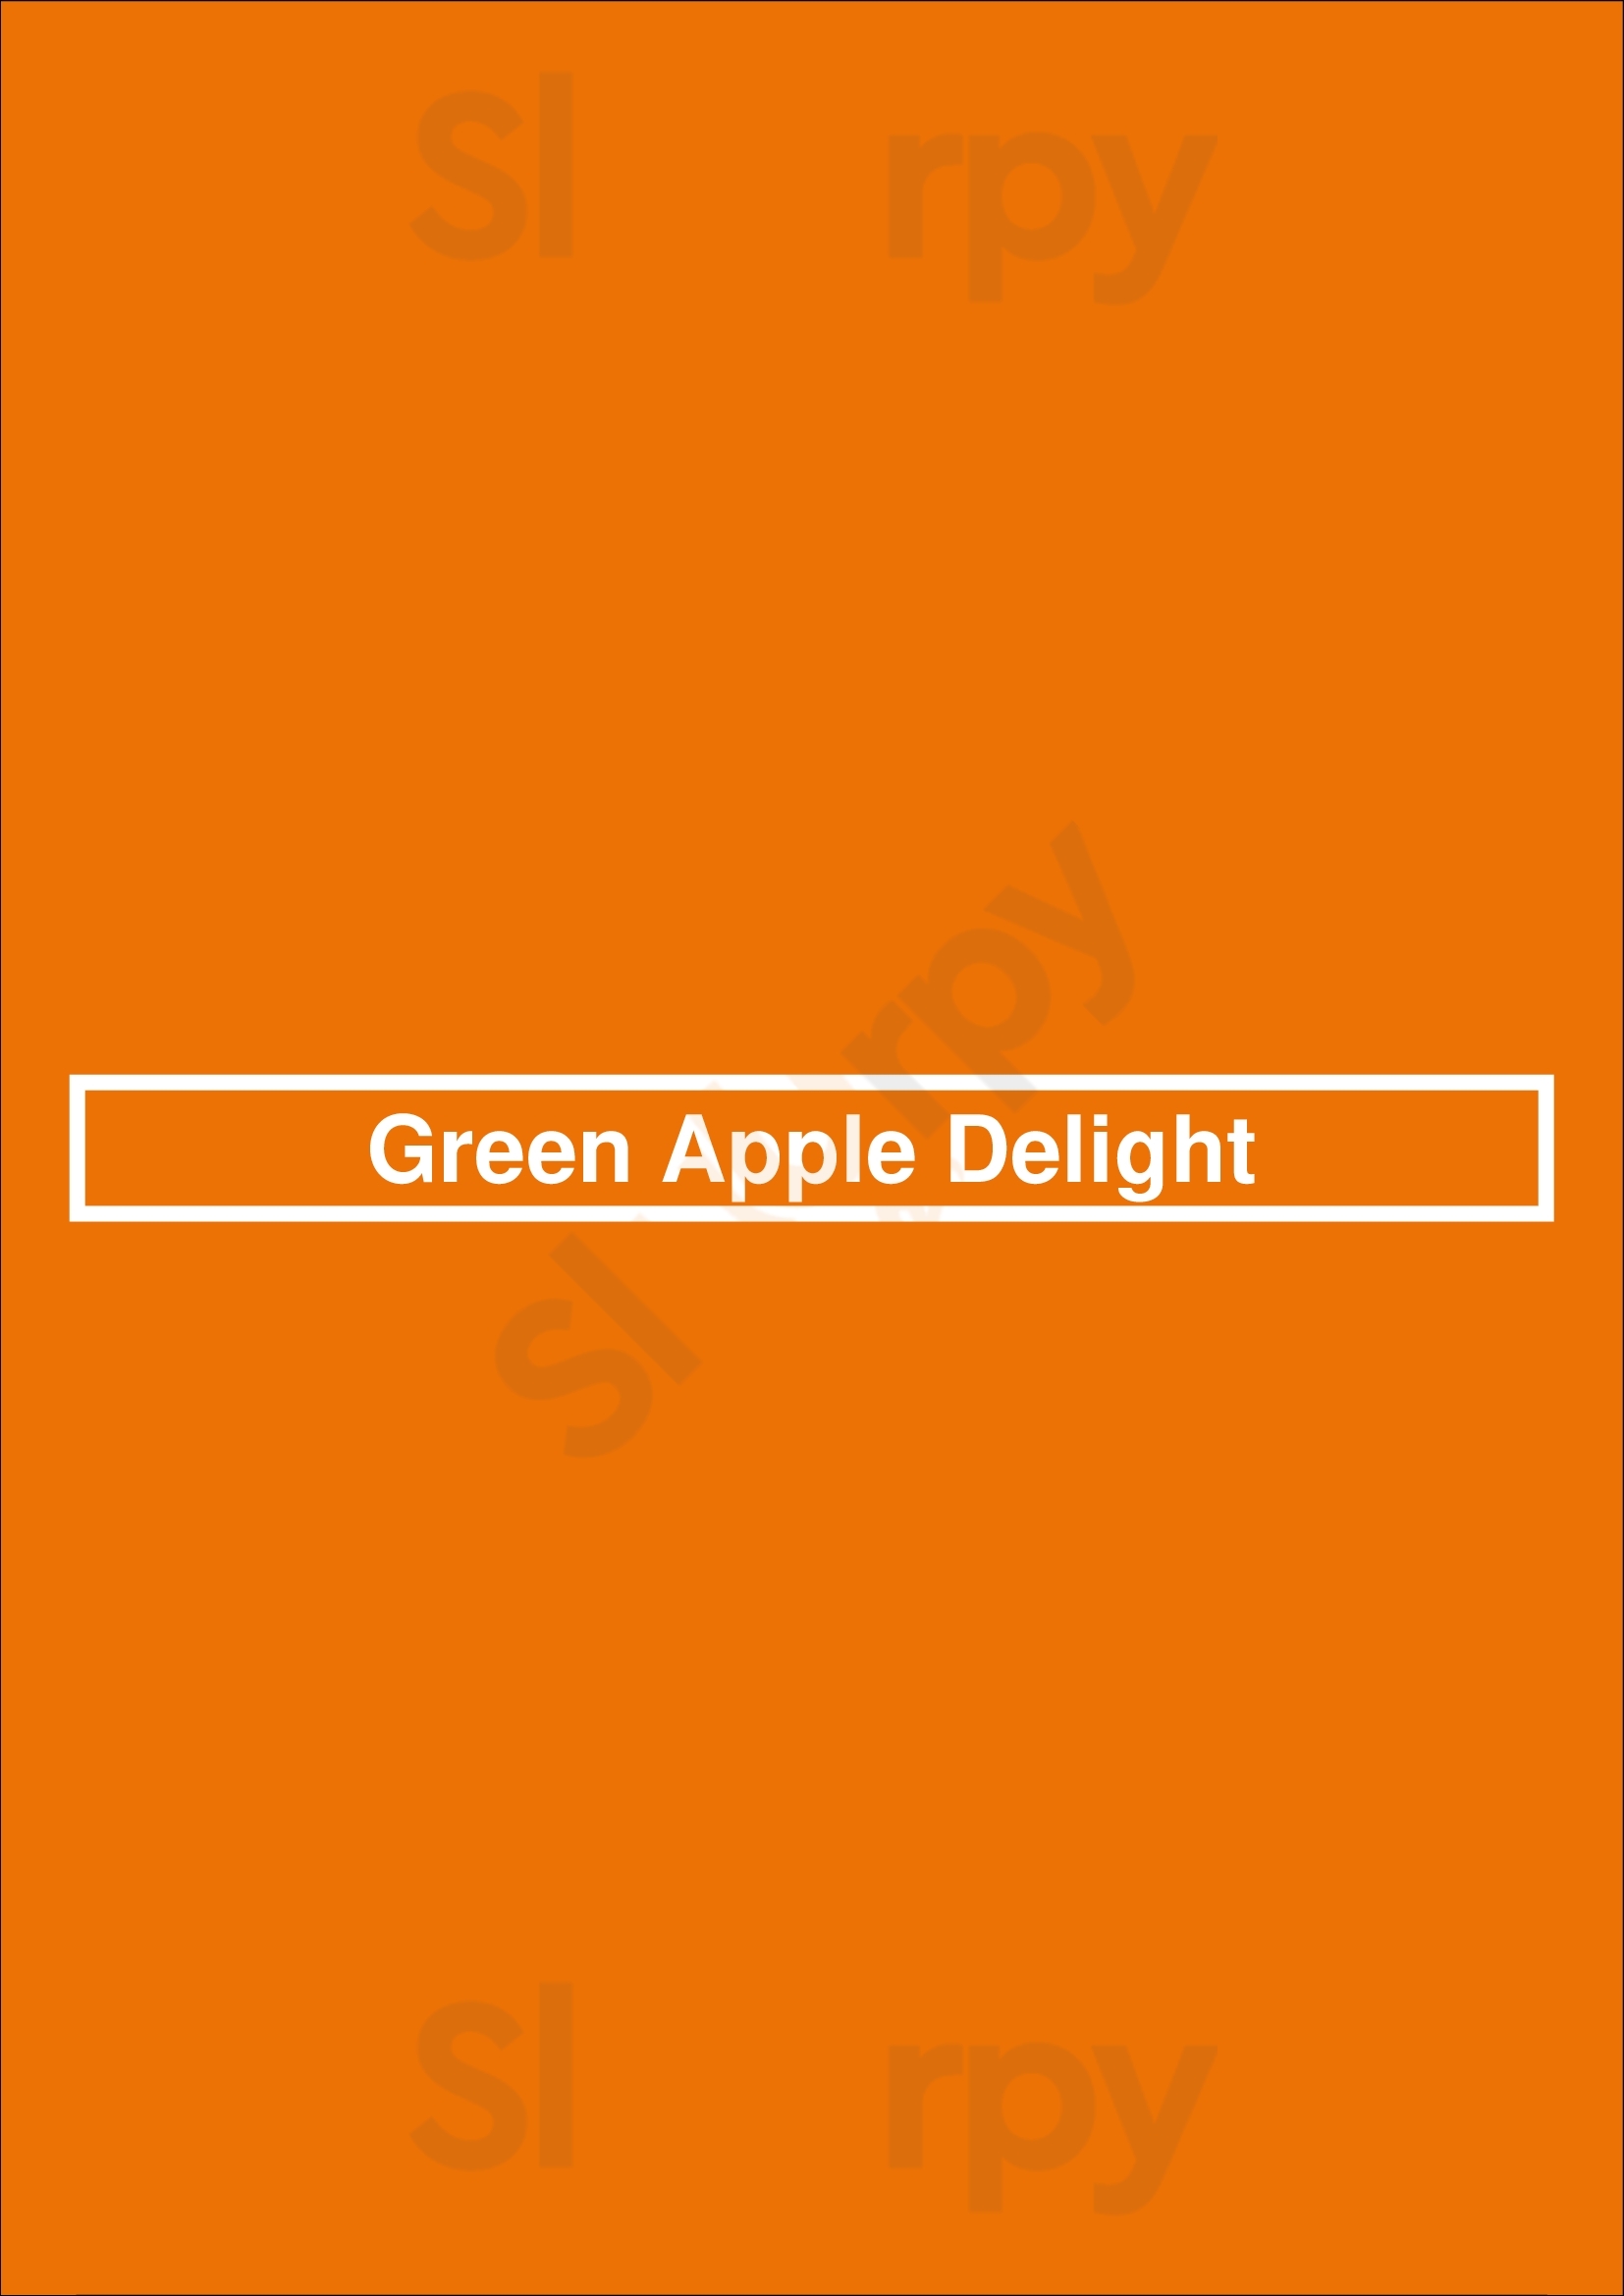 Green Apple Delight Astoria Menu - 1